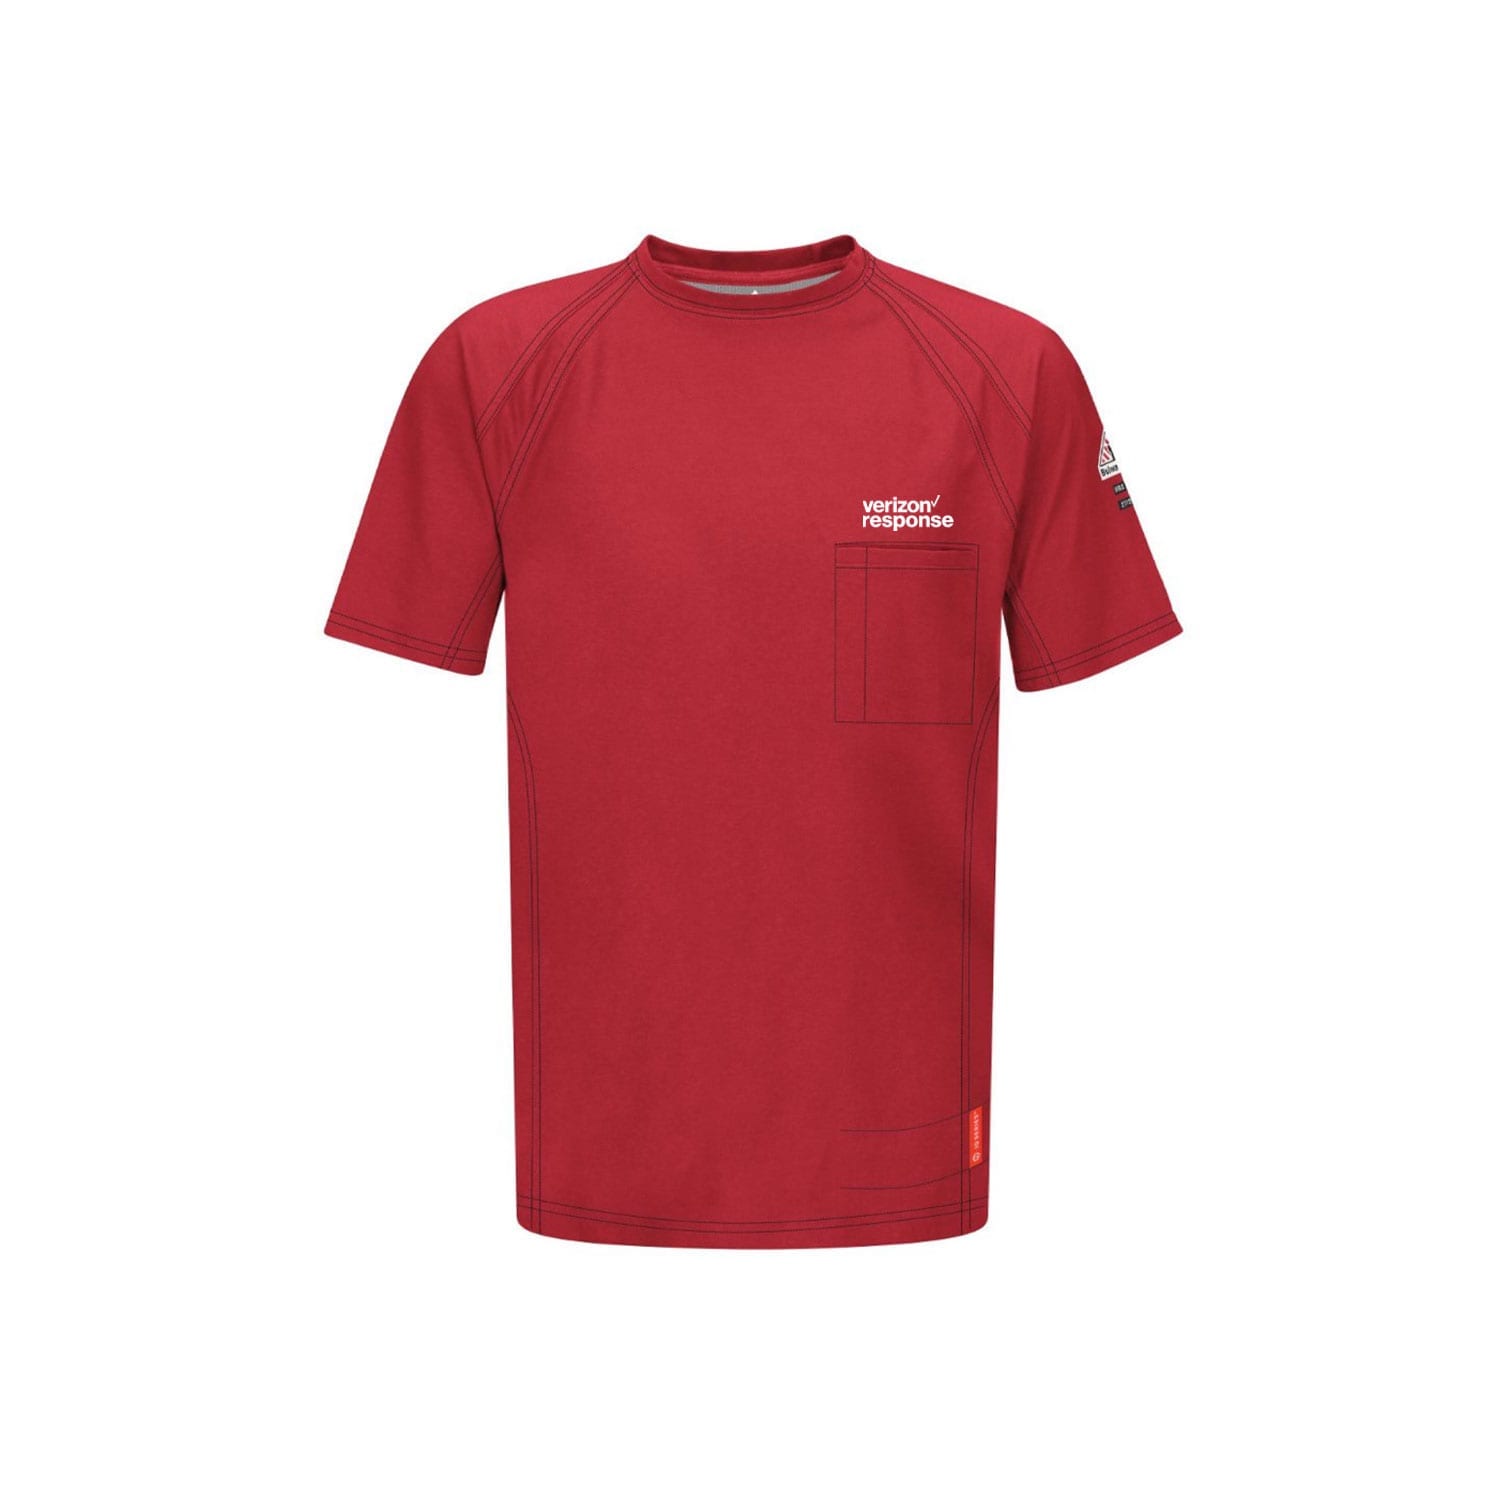 Verizon Response iQ Series Short Sleeve T-Shirt